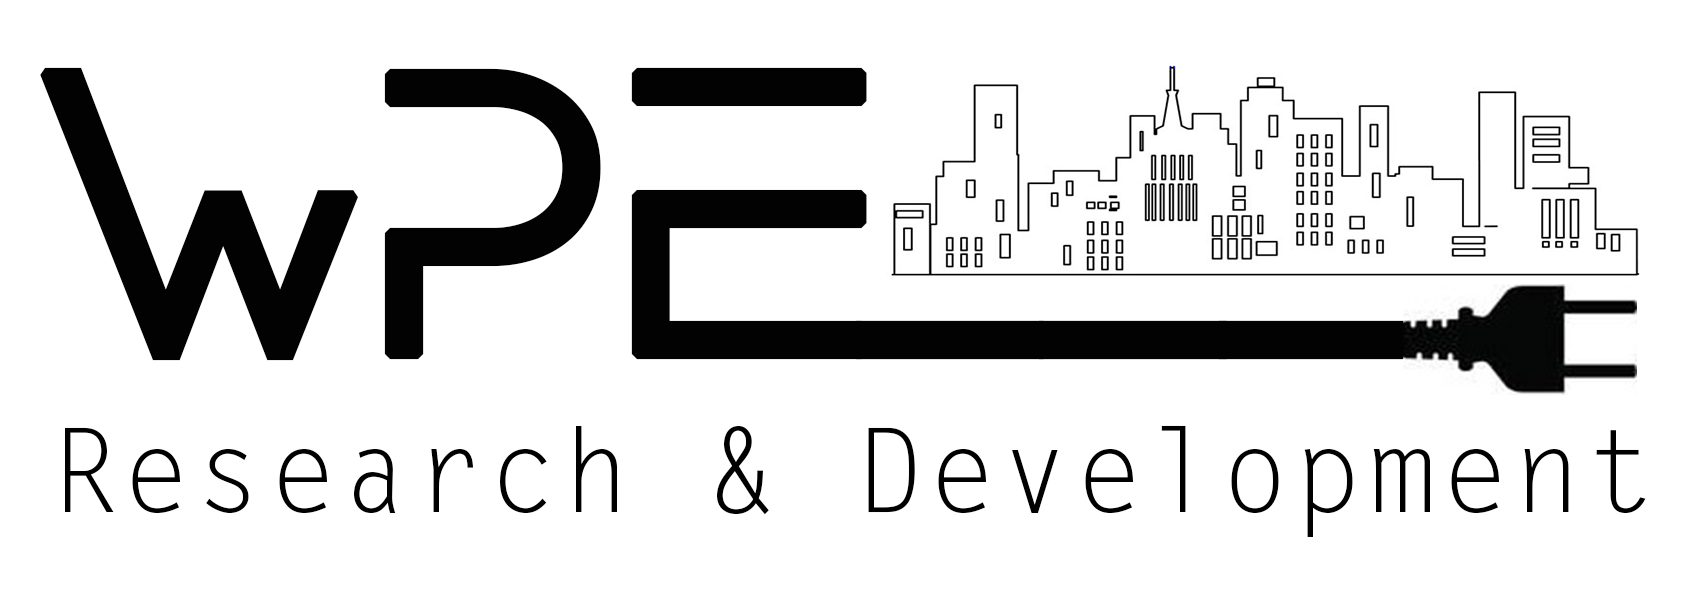 WPE Research & Development